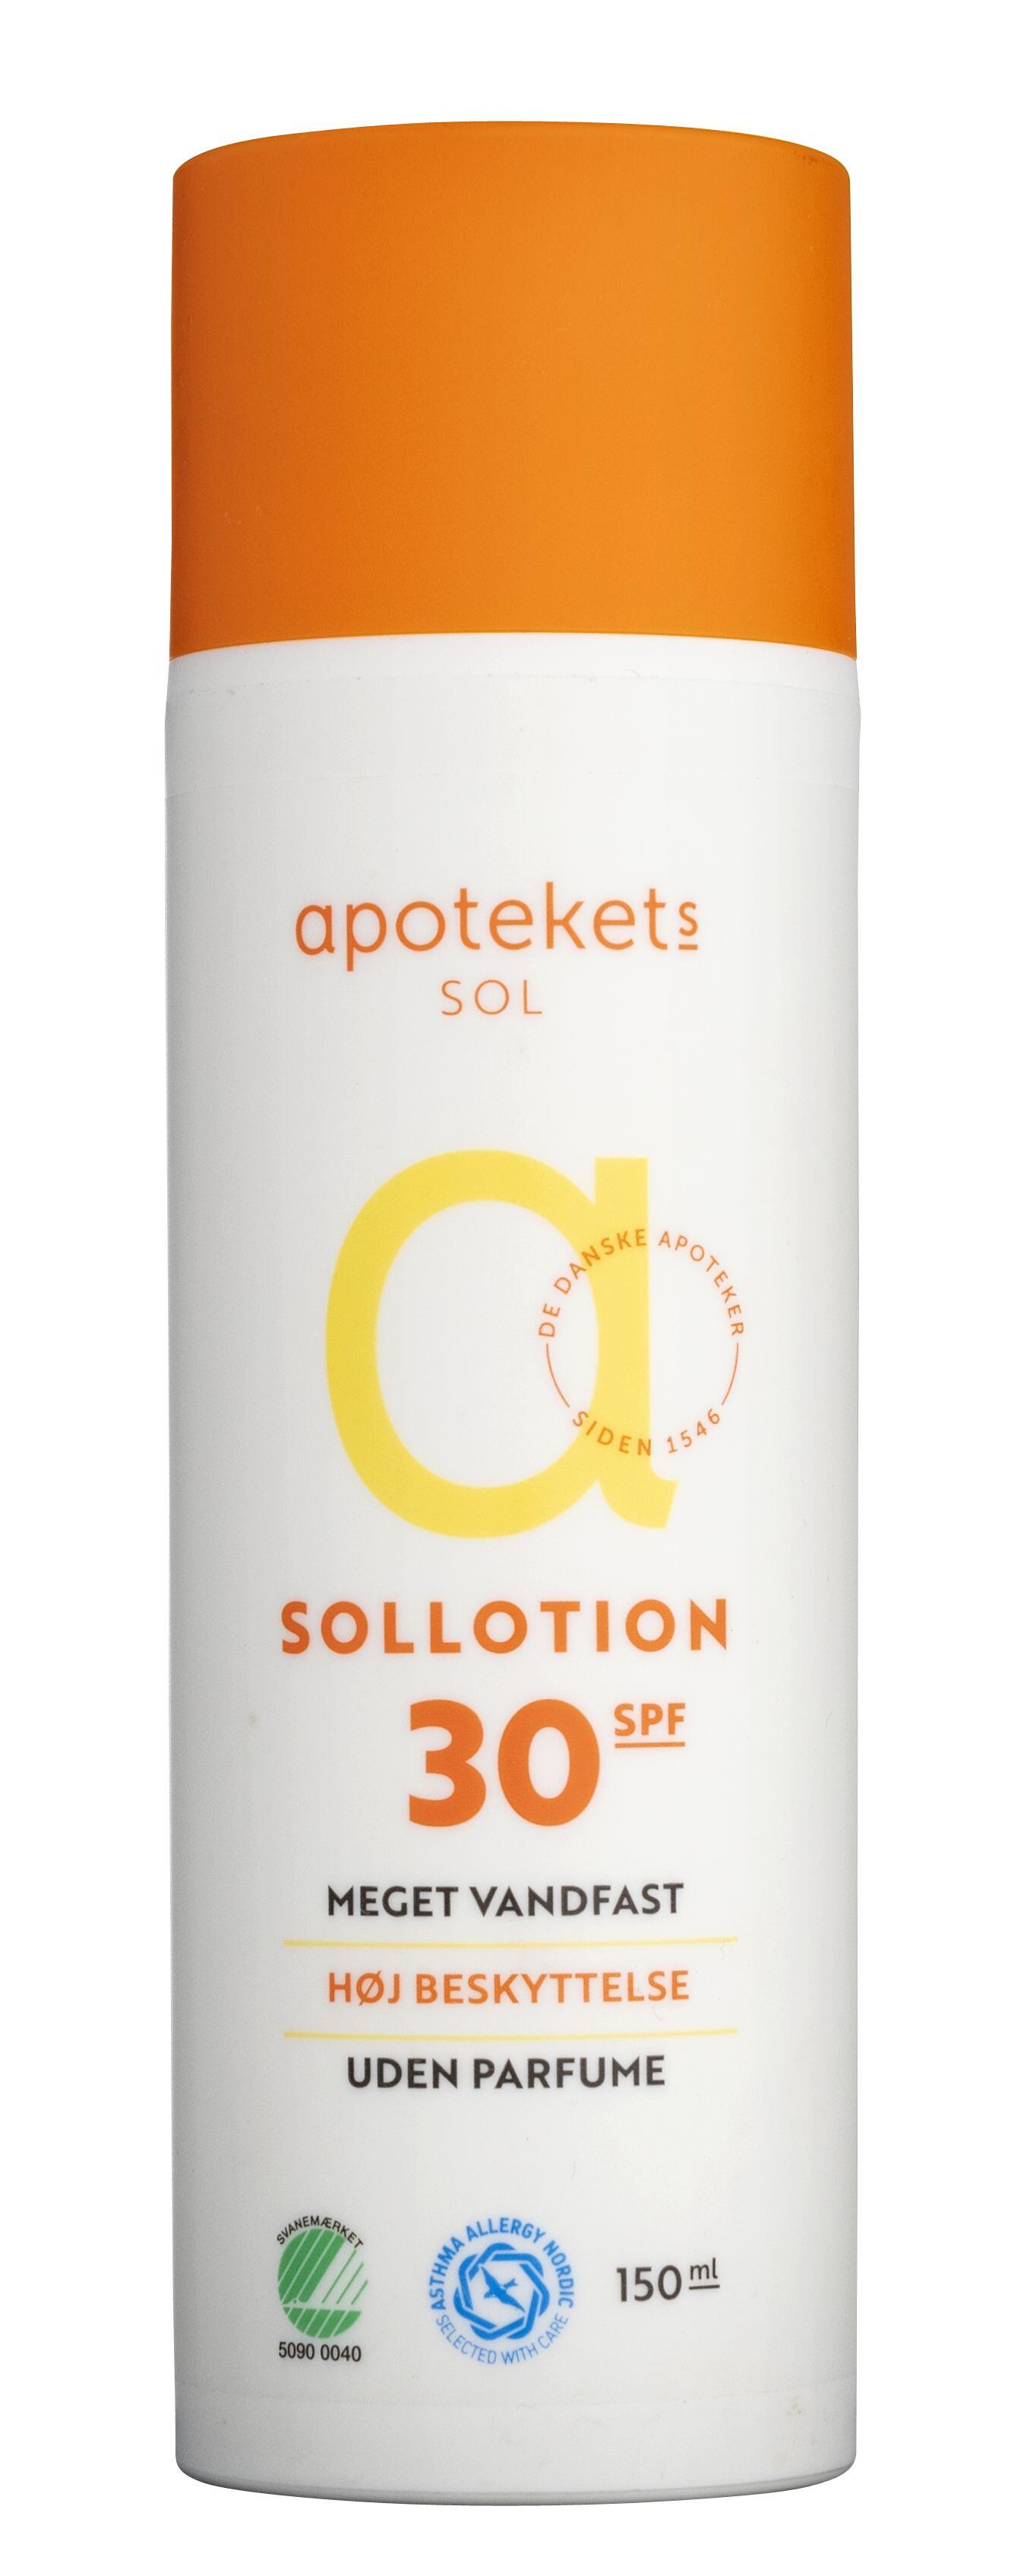 Sollotion SPF 30 Apotekets